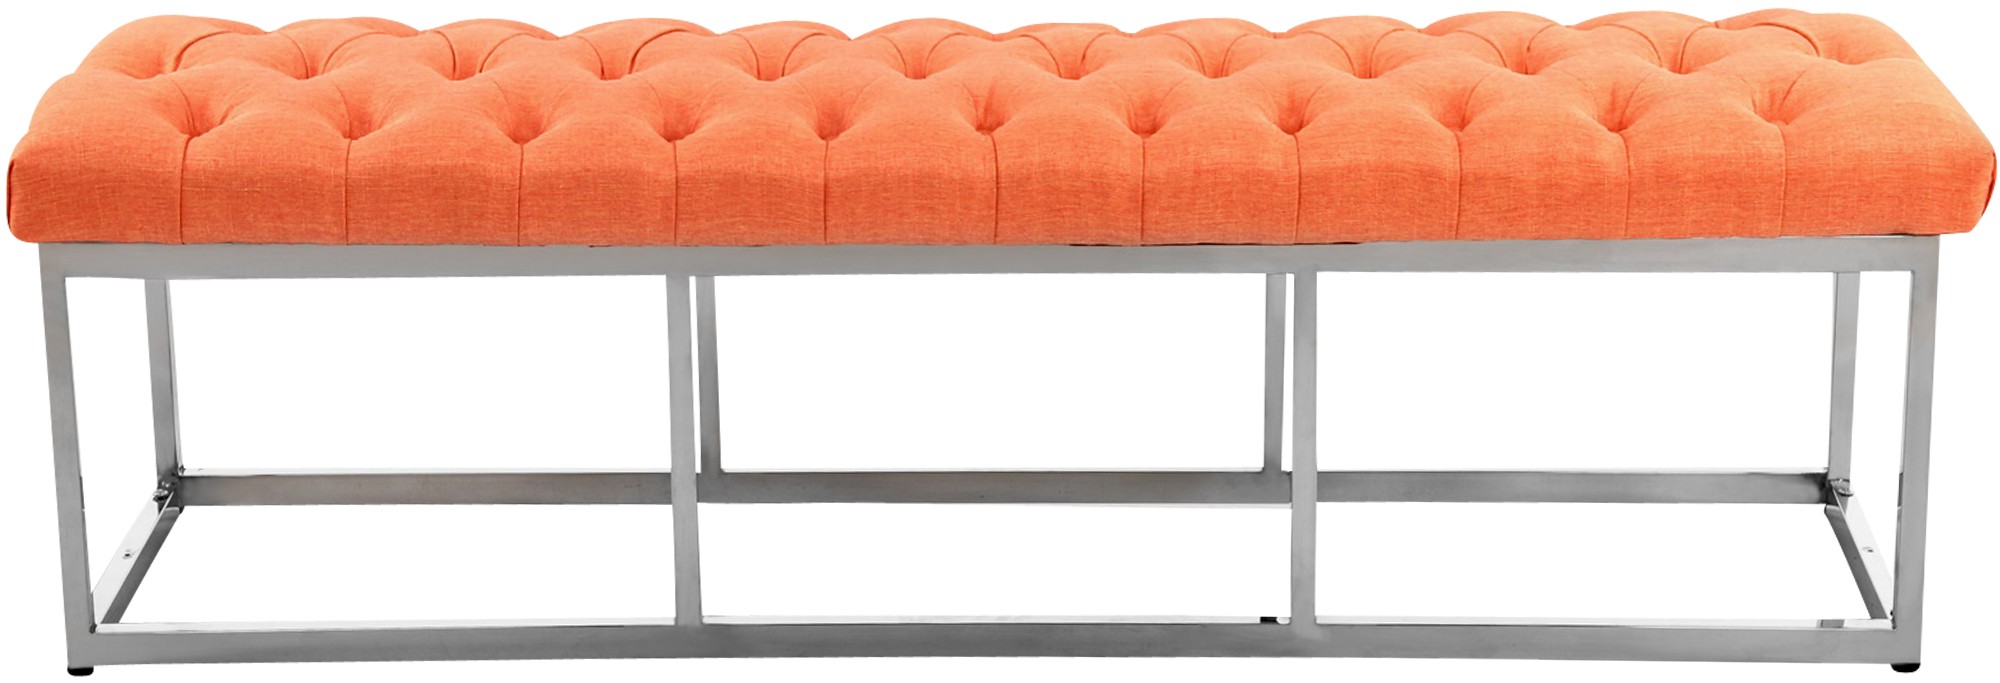 Sitzbank Amun Stoff Edelstahl orange 150 cm